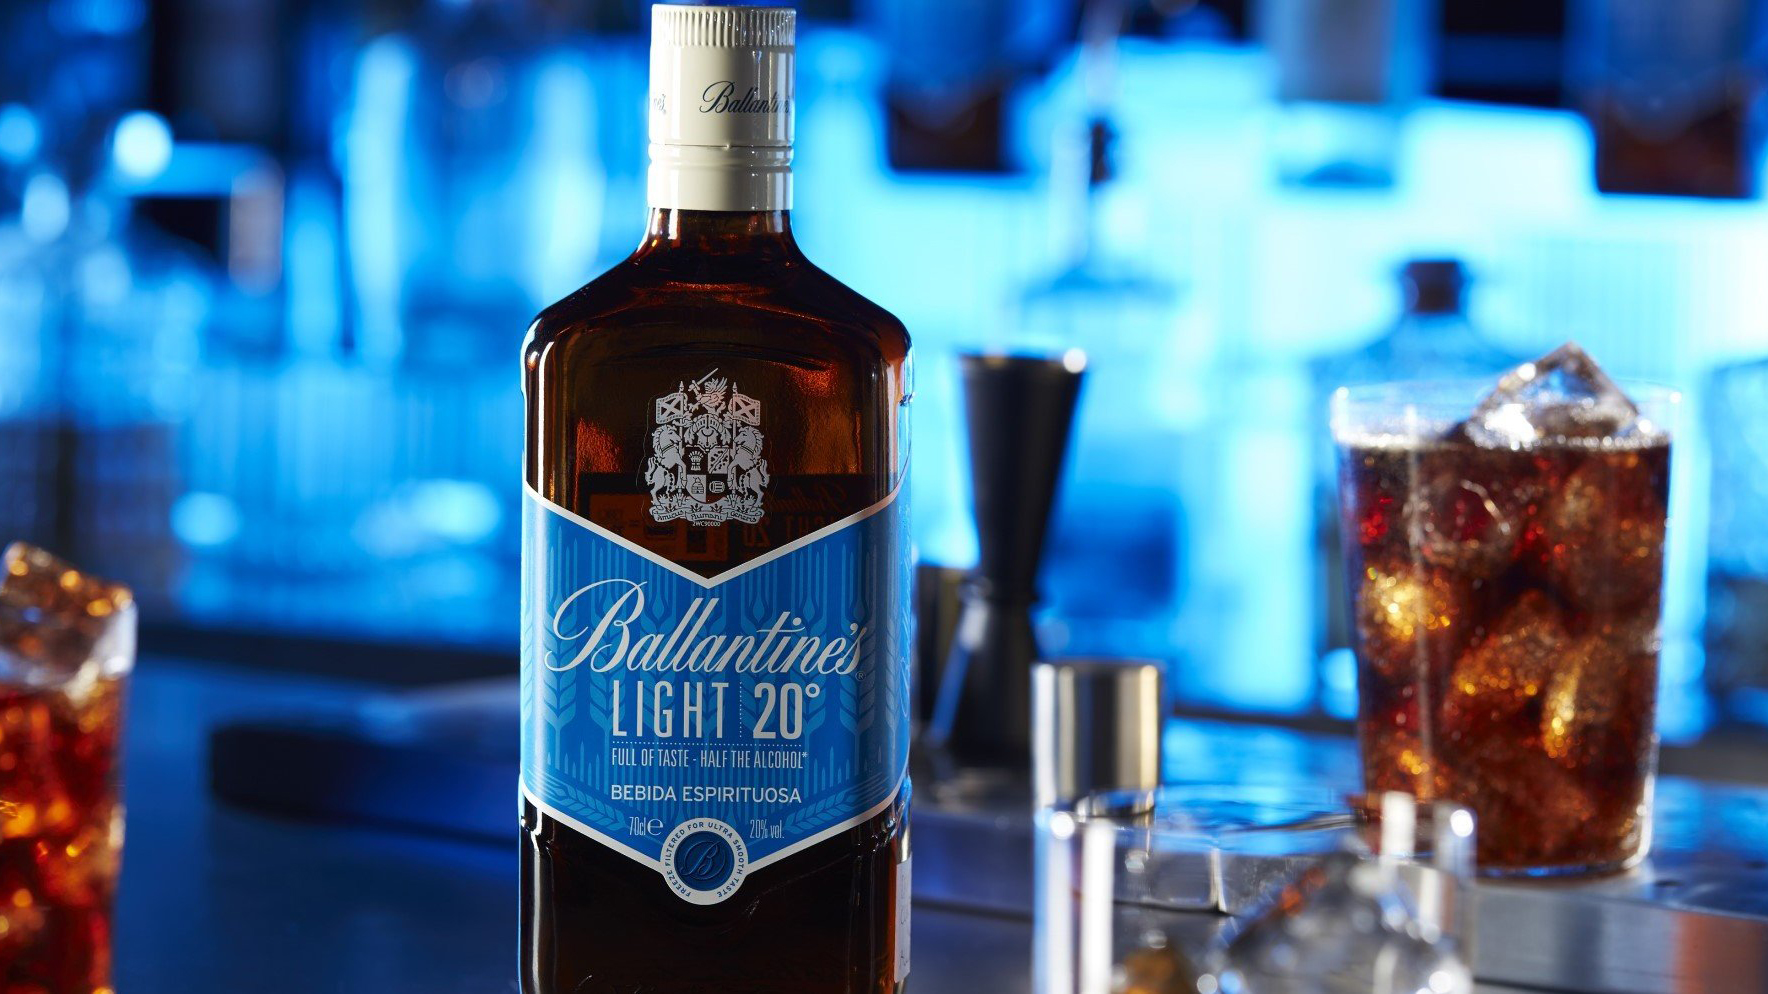 Ballantine's Light Beefeater Light Pernod Ricard